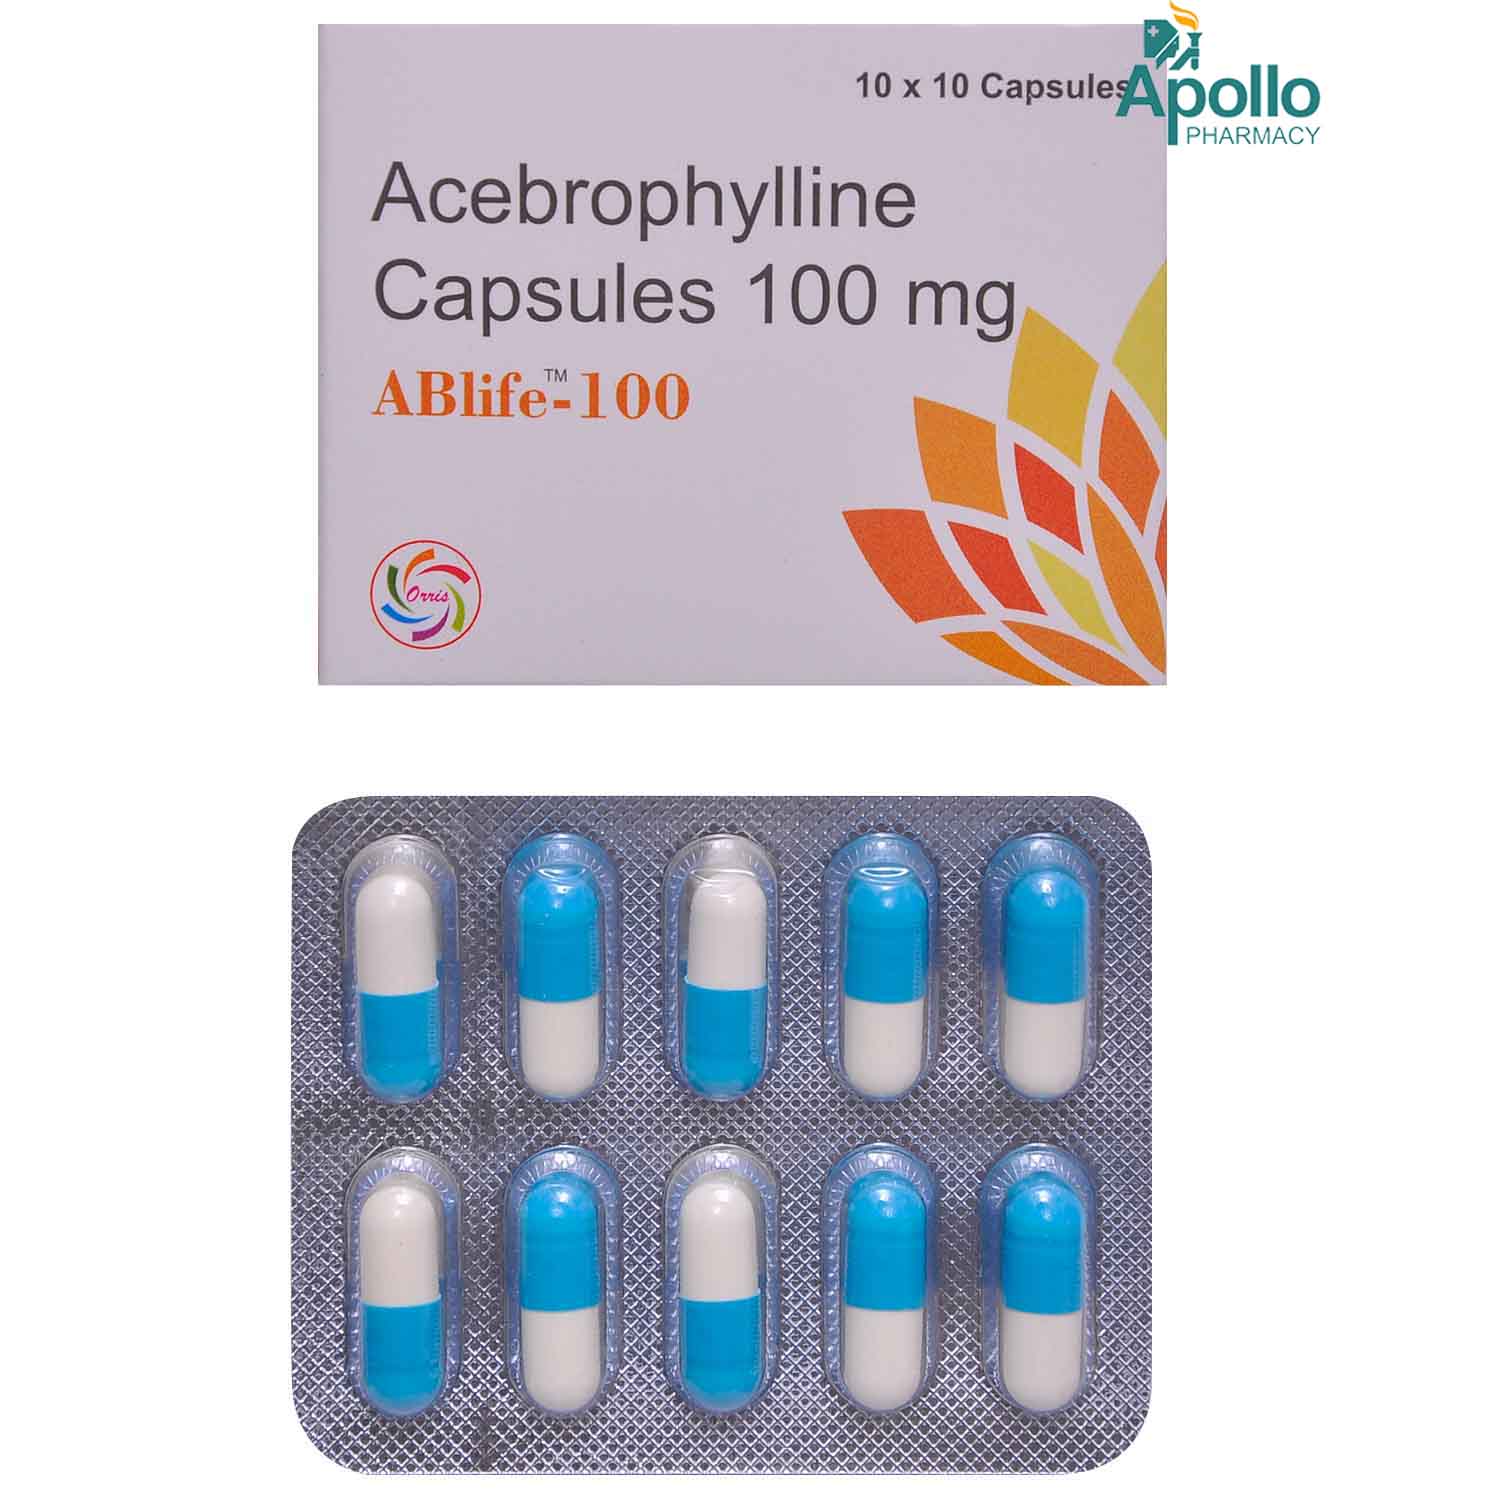 ABlife-100 Capsule 10's, Pack of 10 CAPSULES